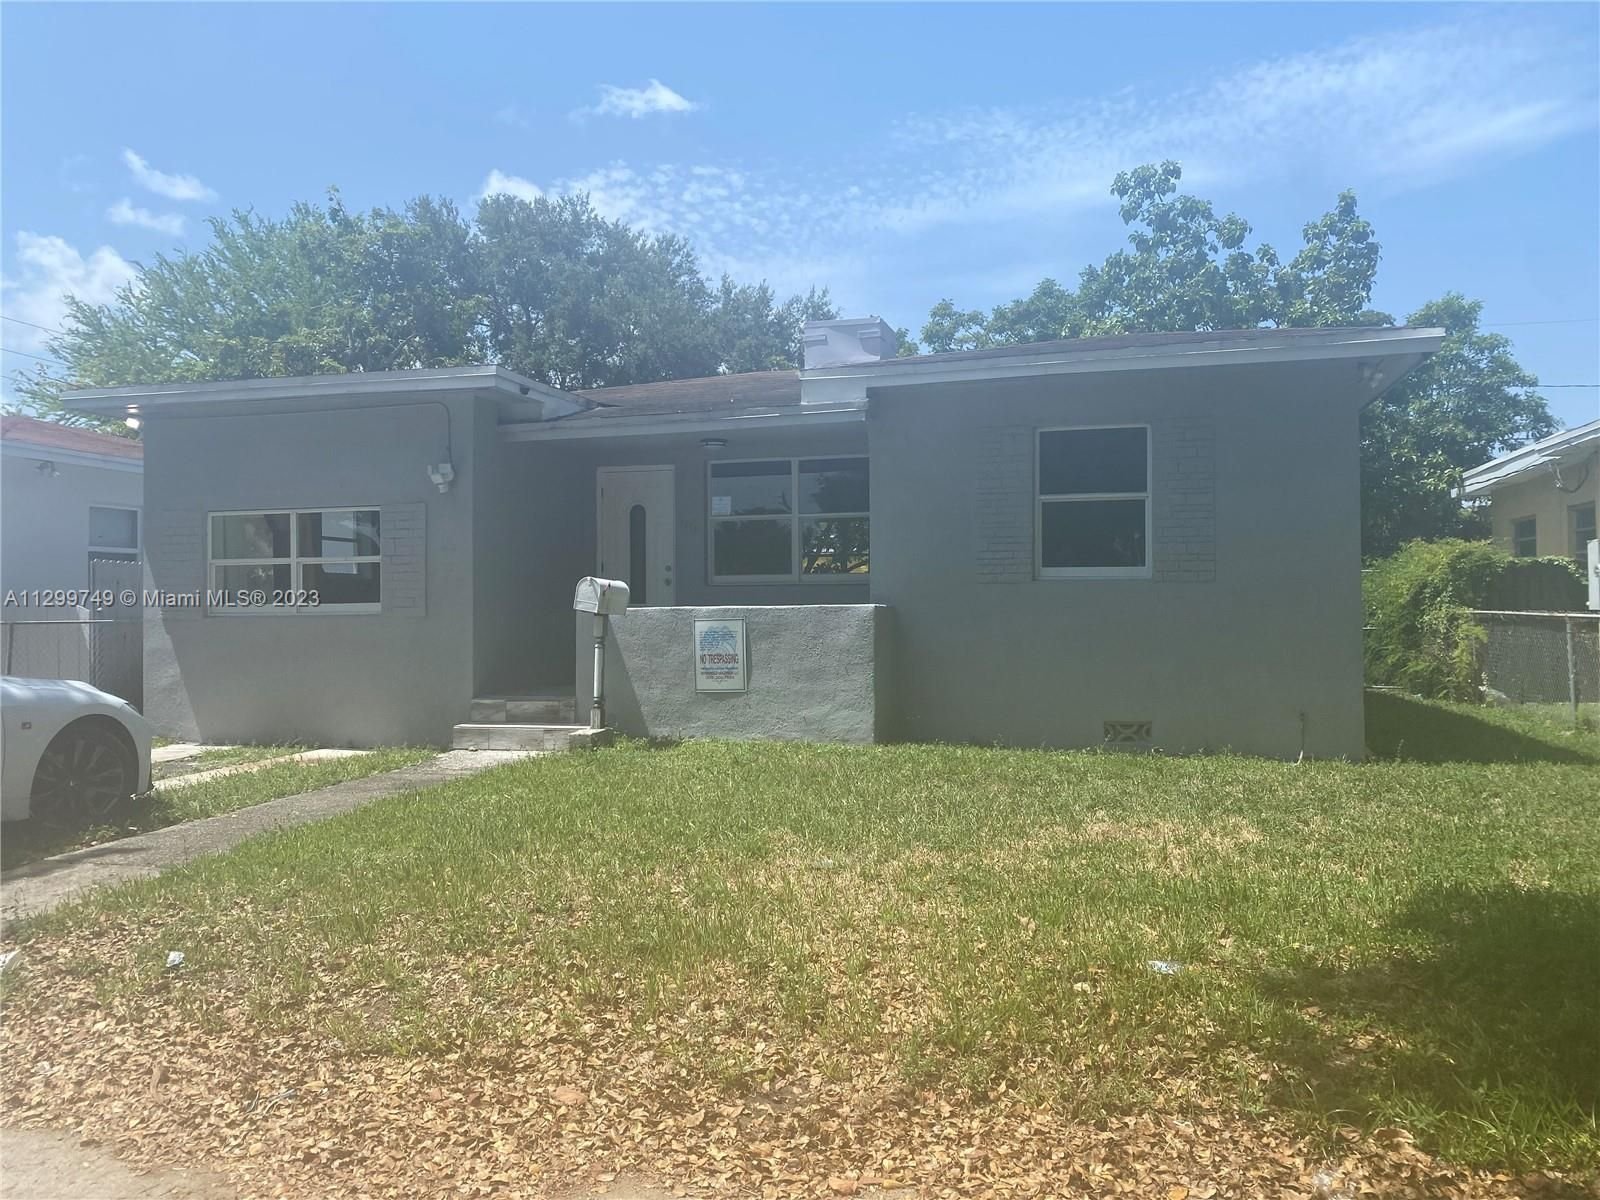 Real estate property located at 1175 46th St, Miami-Dade County, Miami, FL